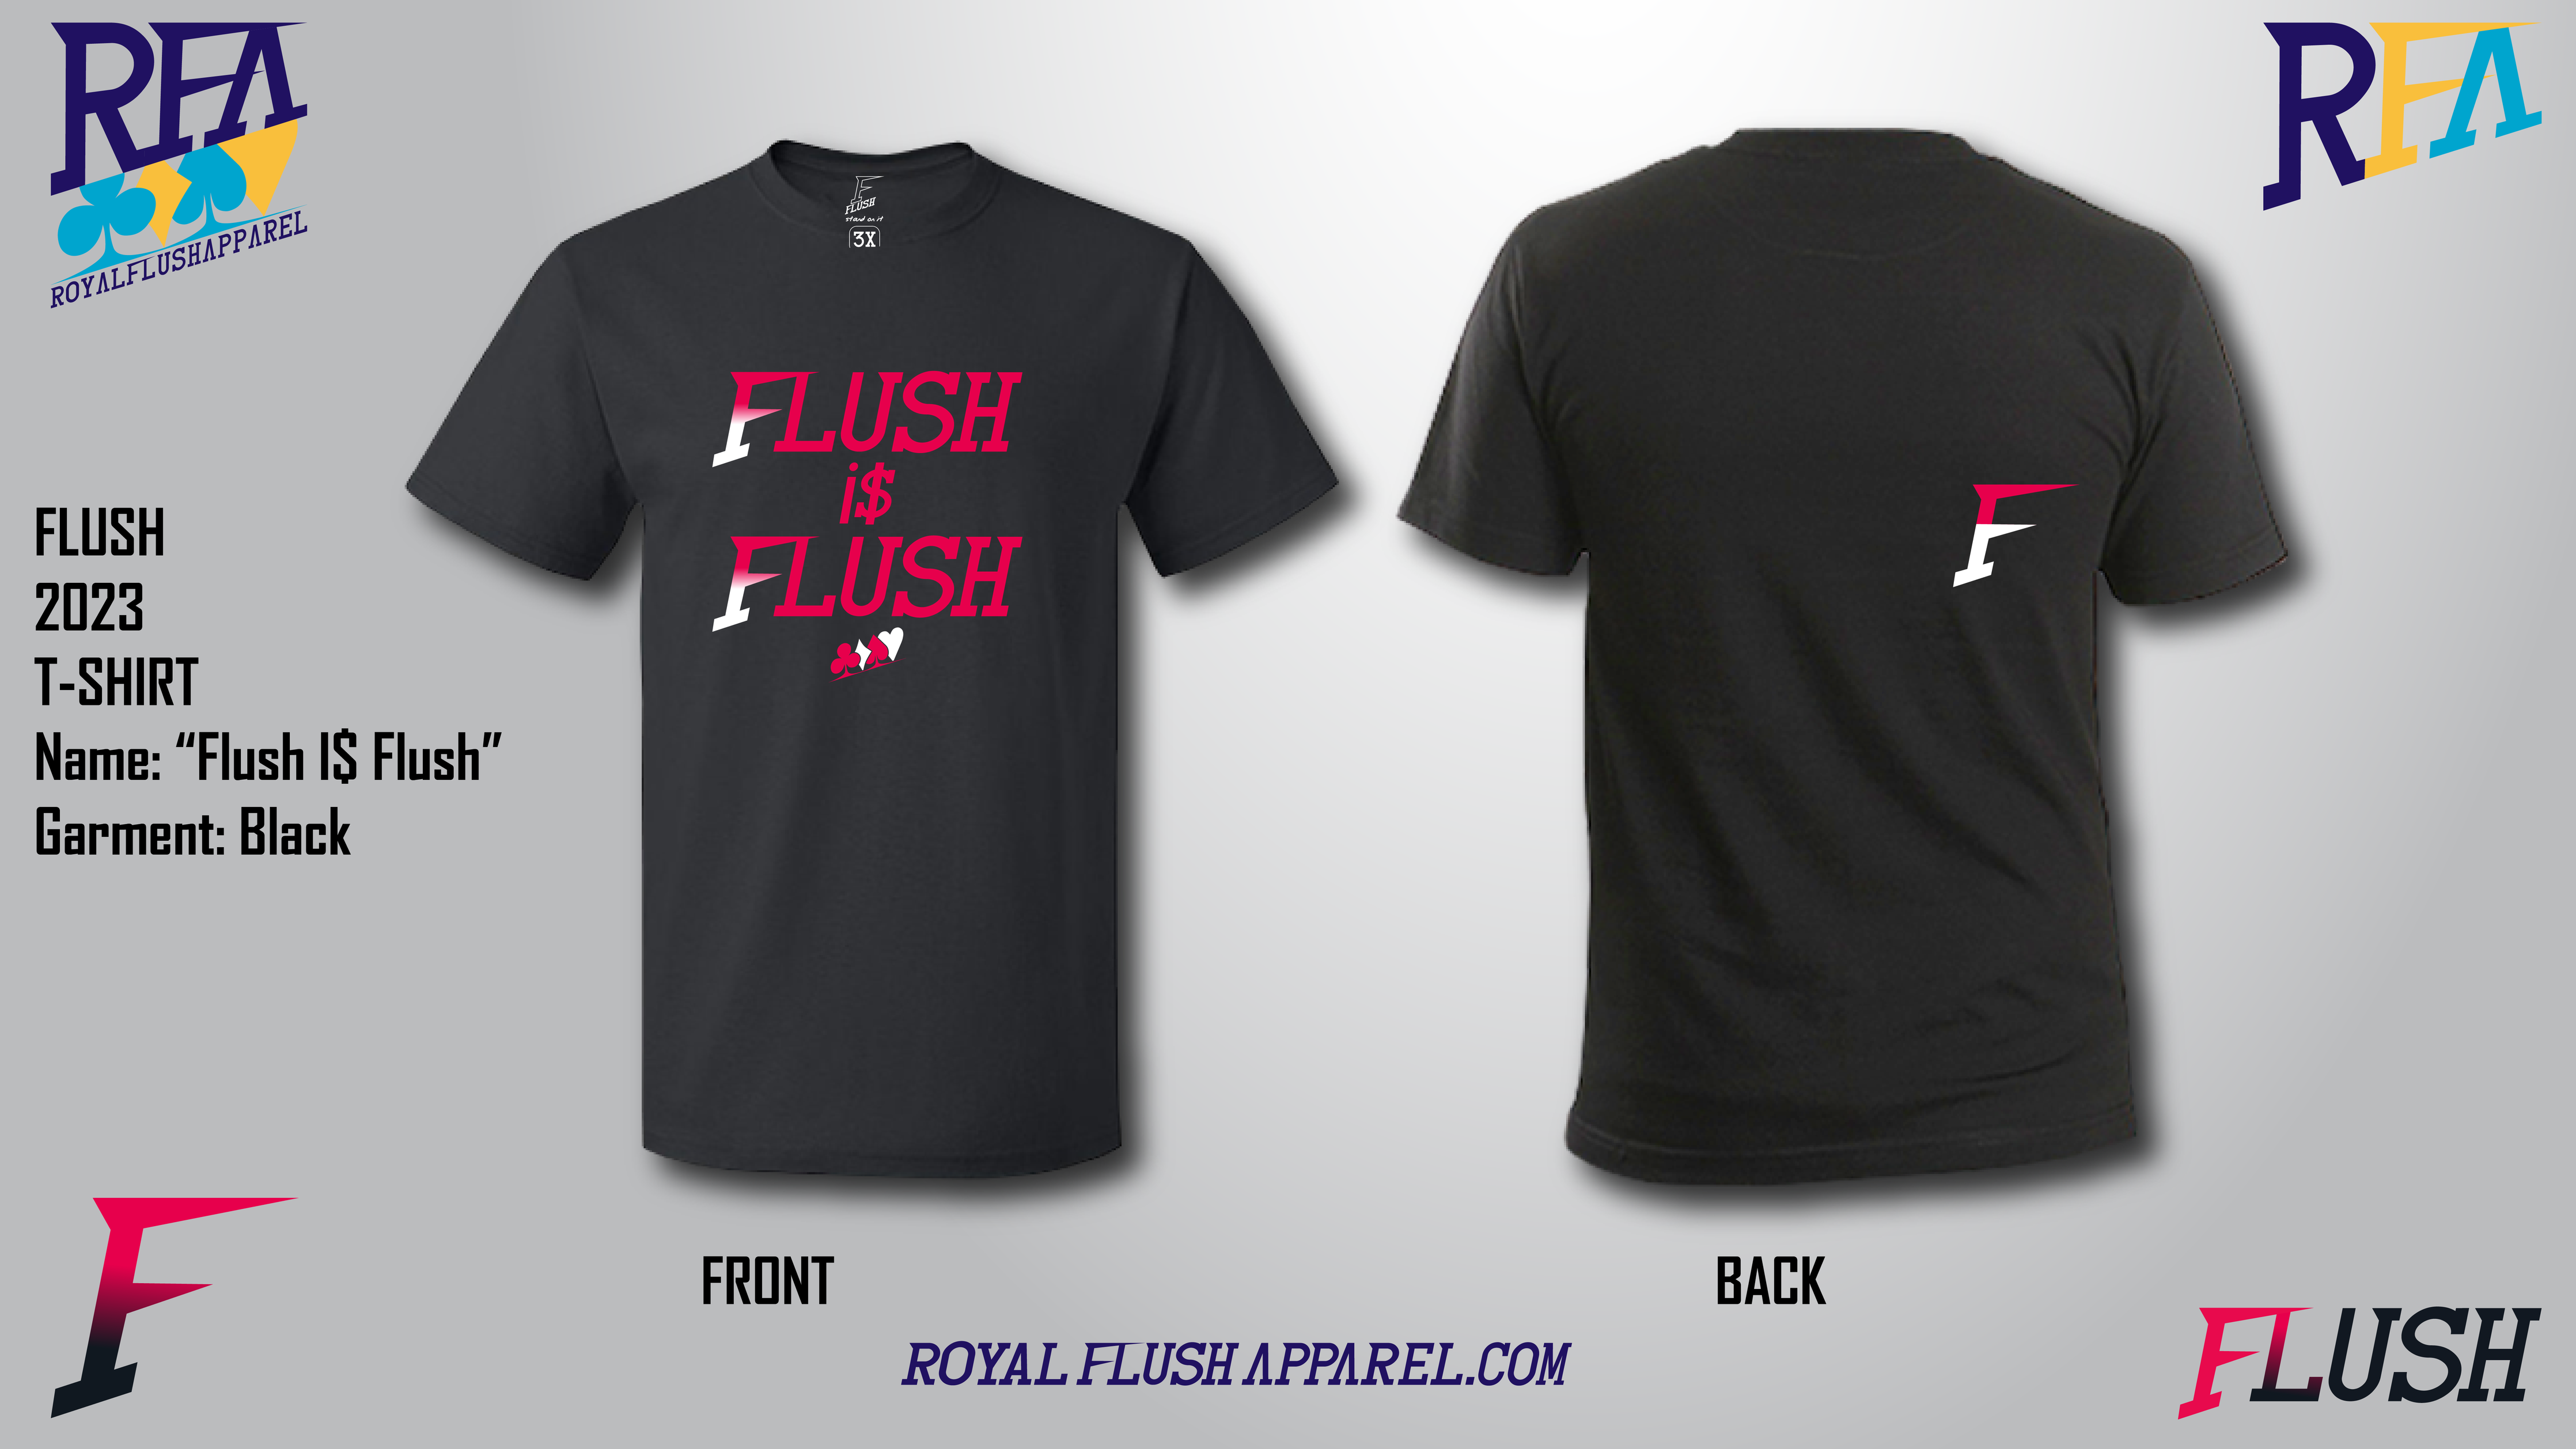 Flush i$ Flush T-Shirt